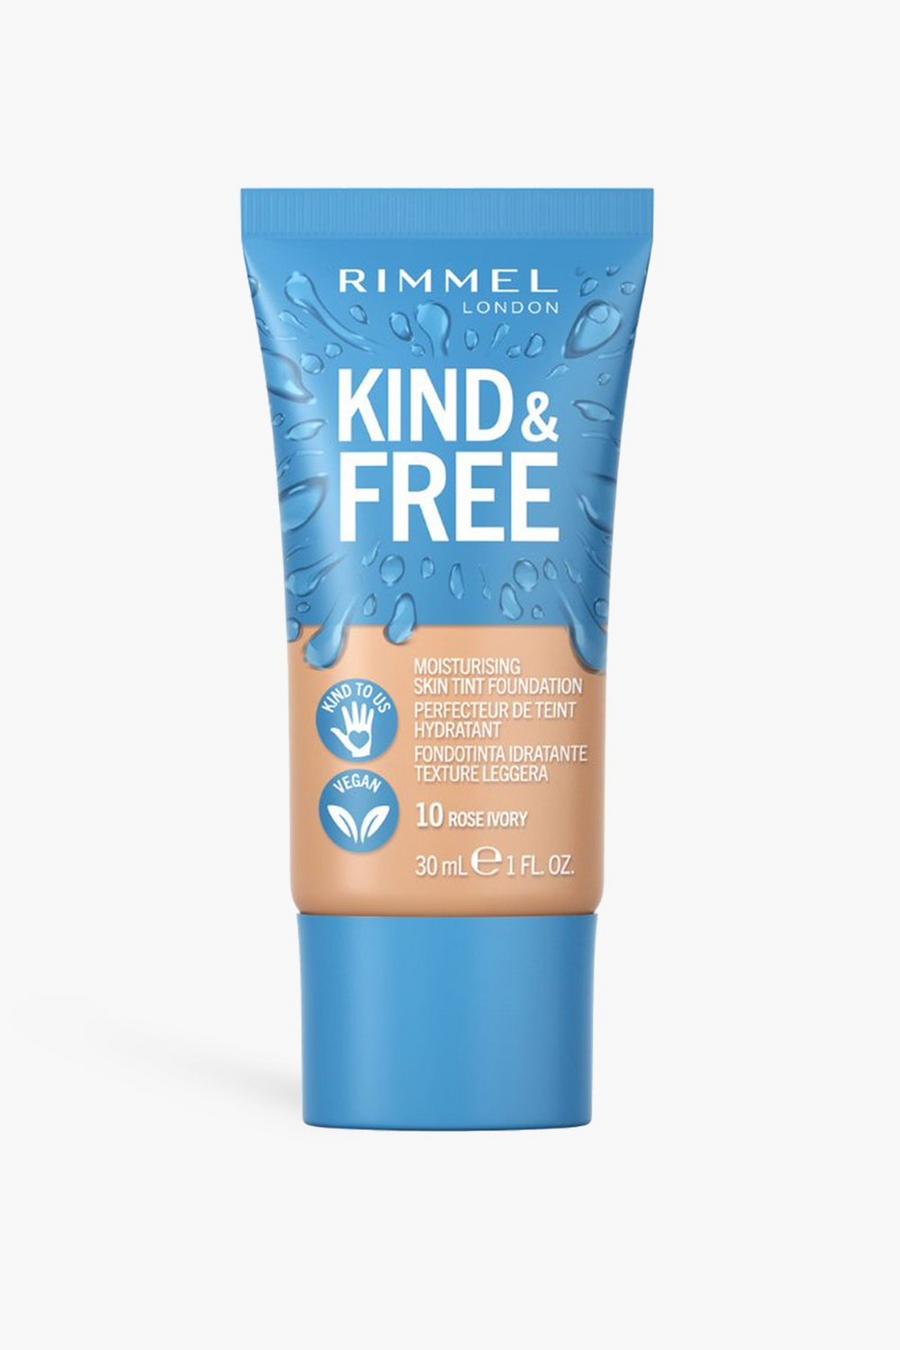 Rimmel Kind & Free Foundation - Rose Ivory